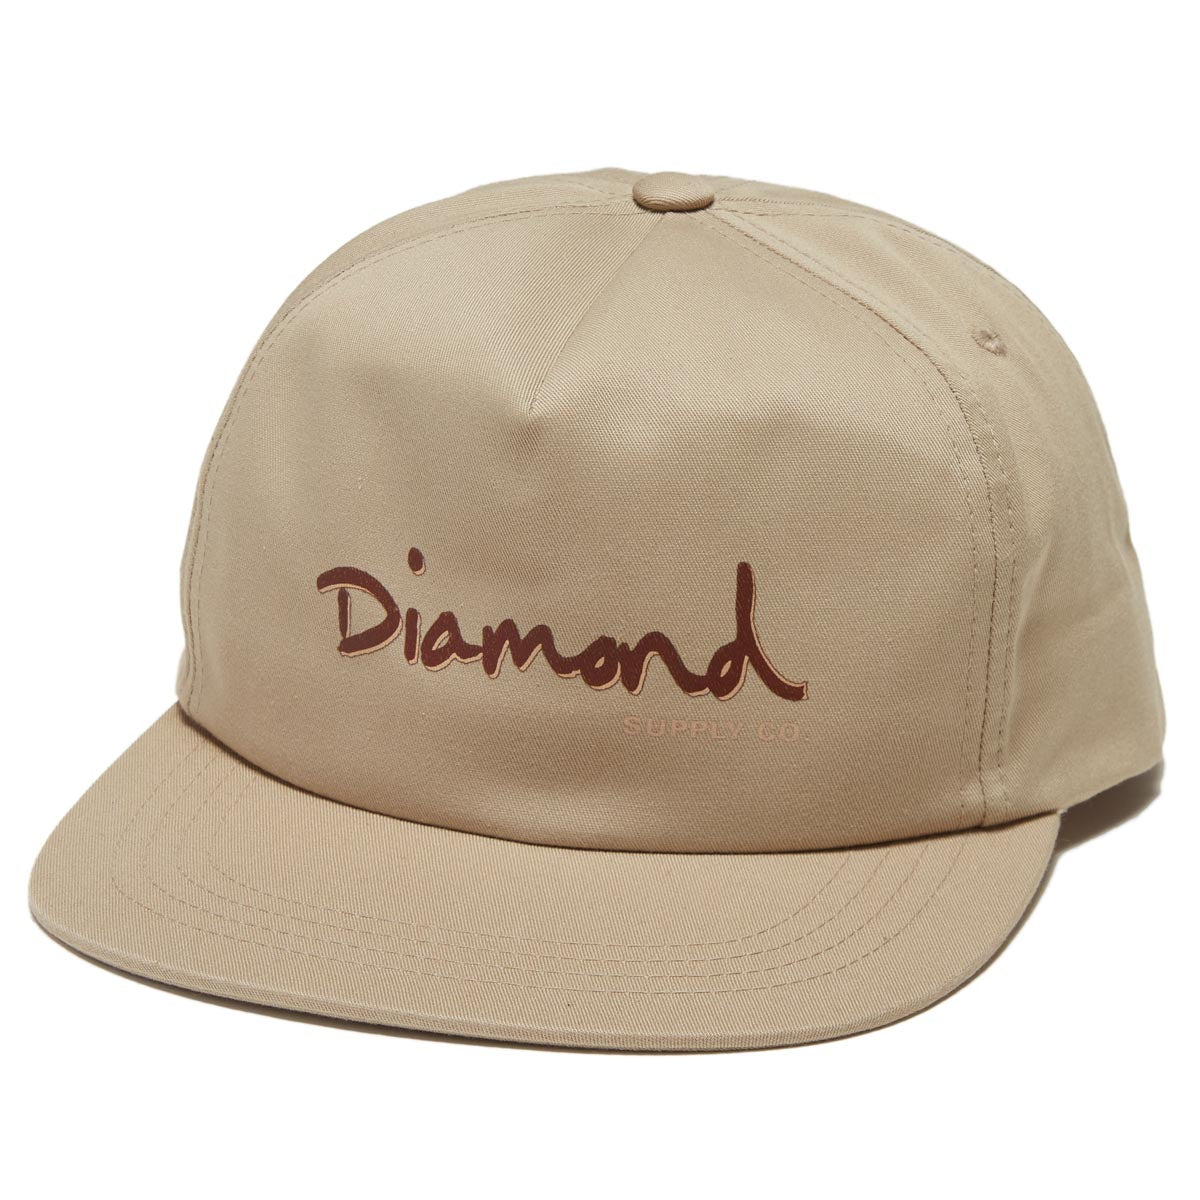 Diamond Supply Co. Outline Snapback Hat - Khaki image 1